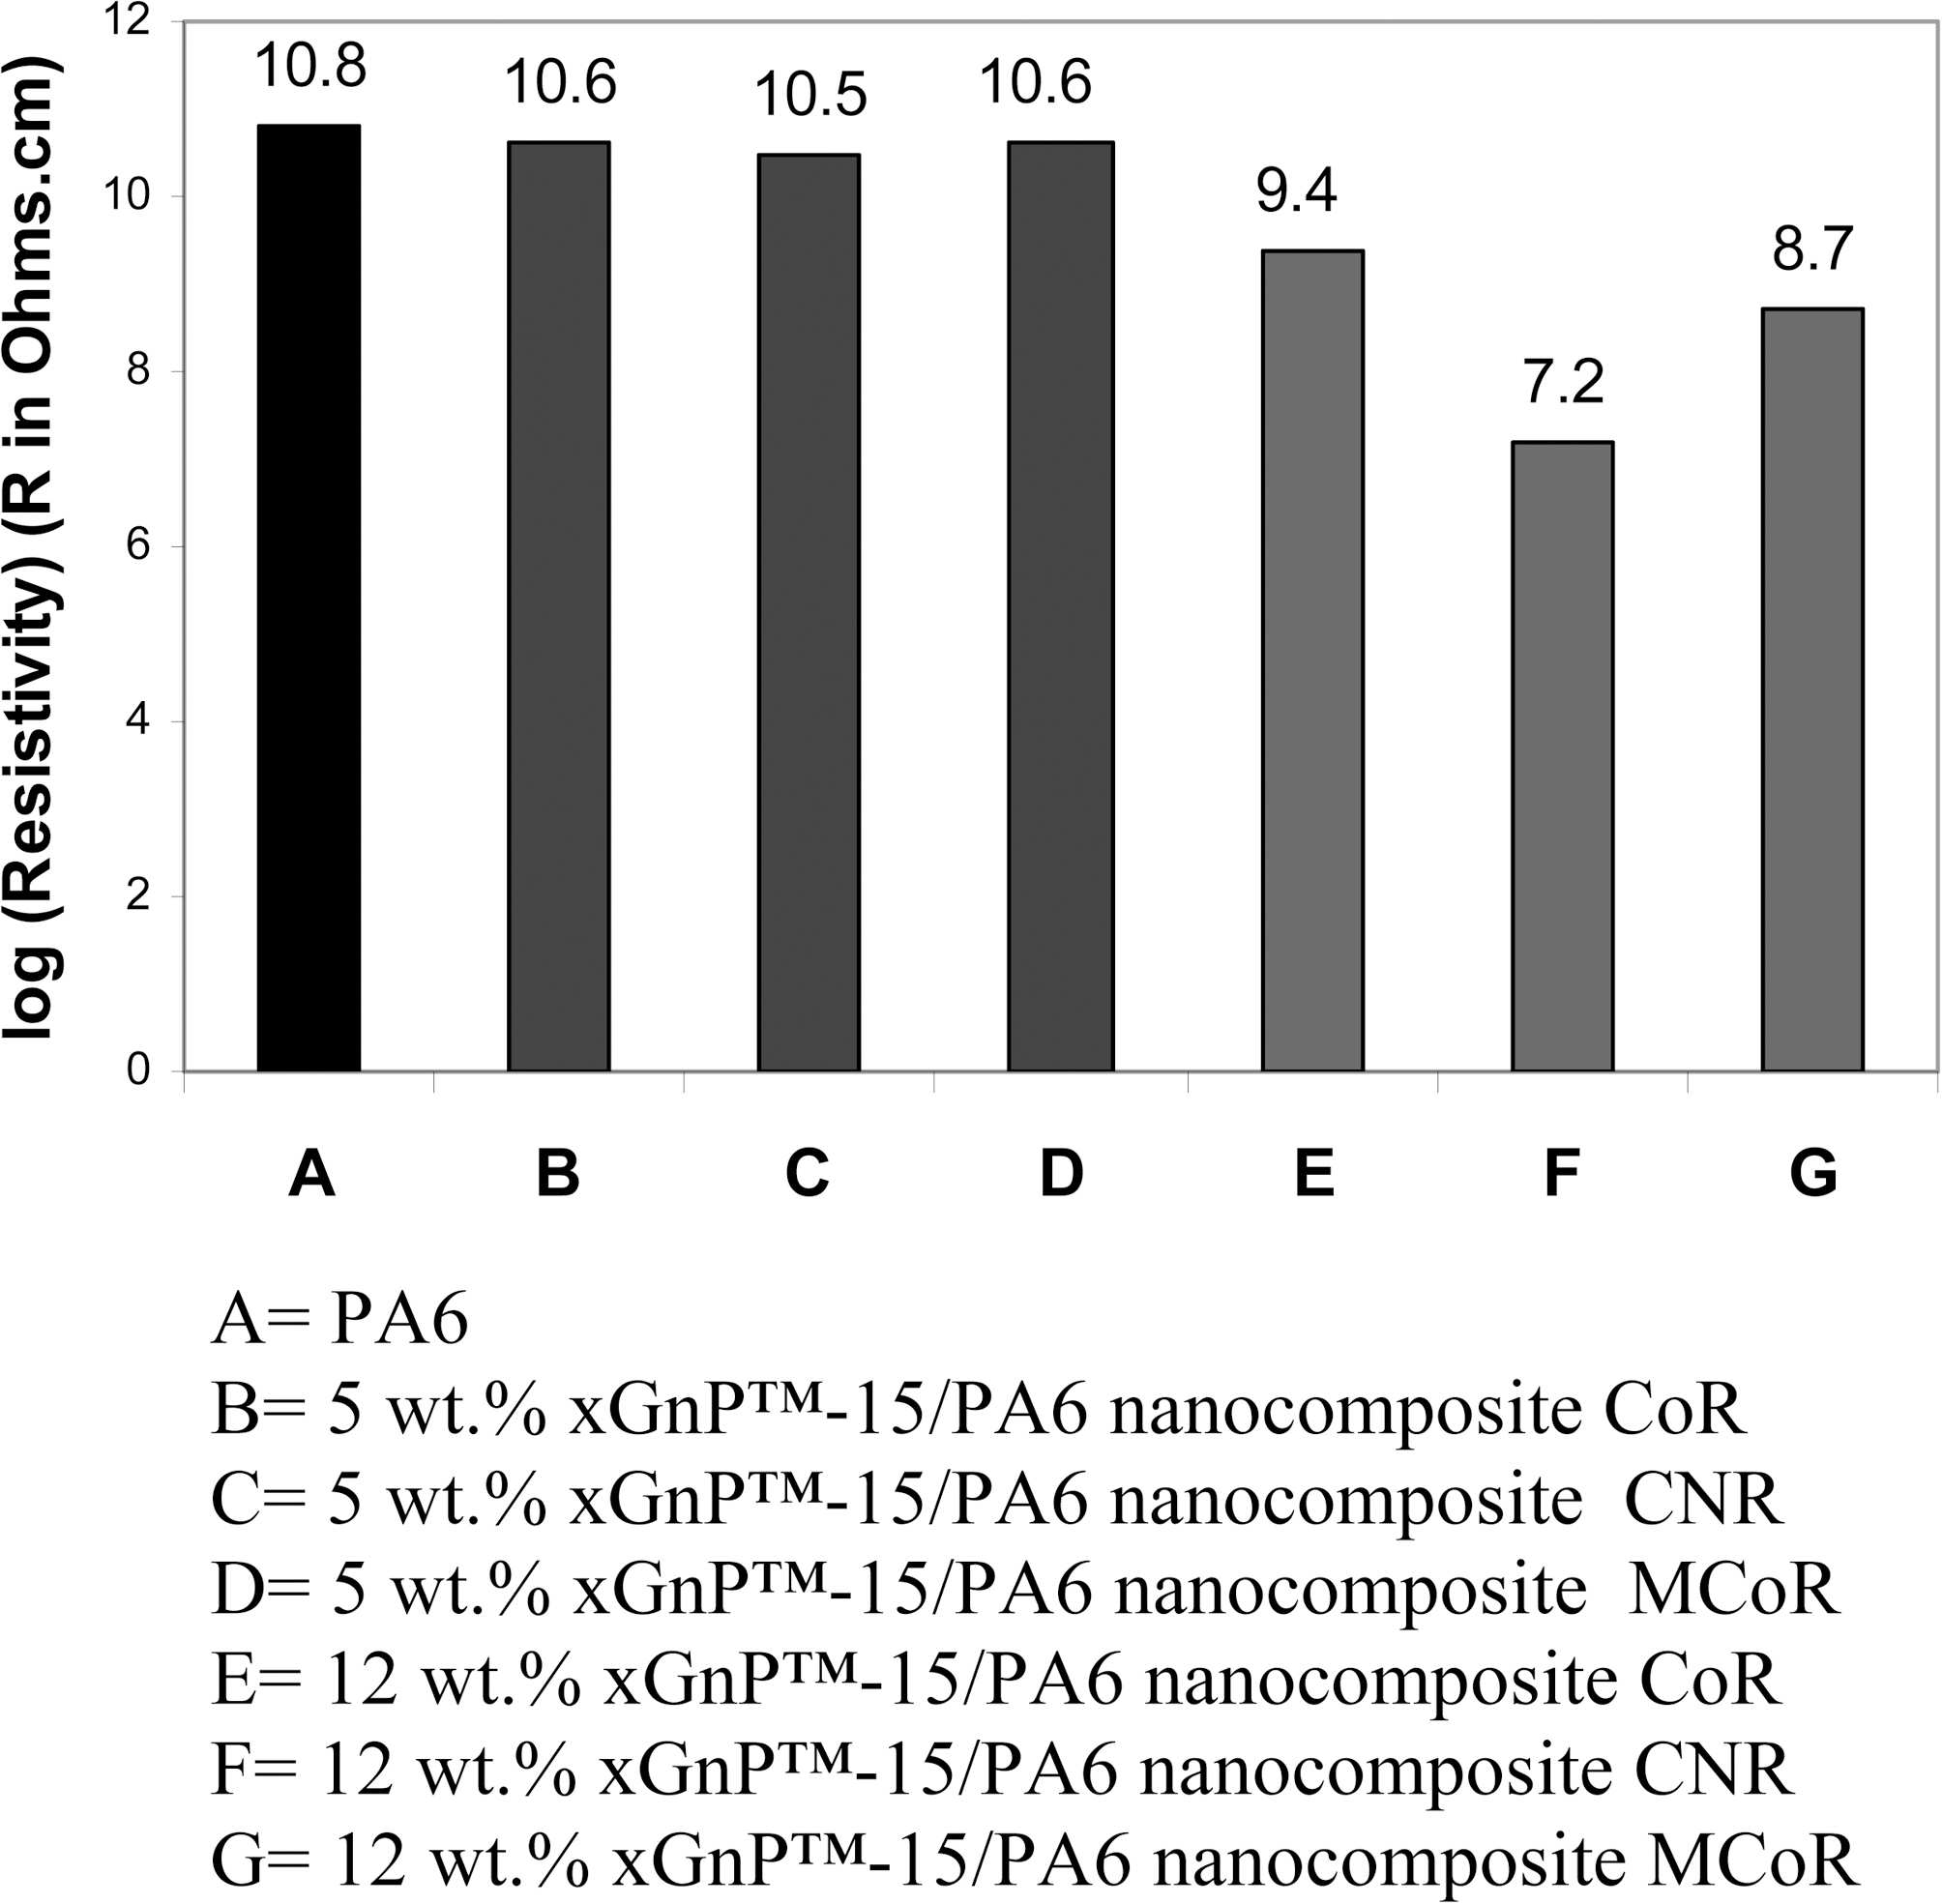 The resistivity of xGnP-15 reinforced PA6 nanocomposite.